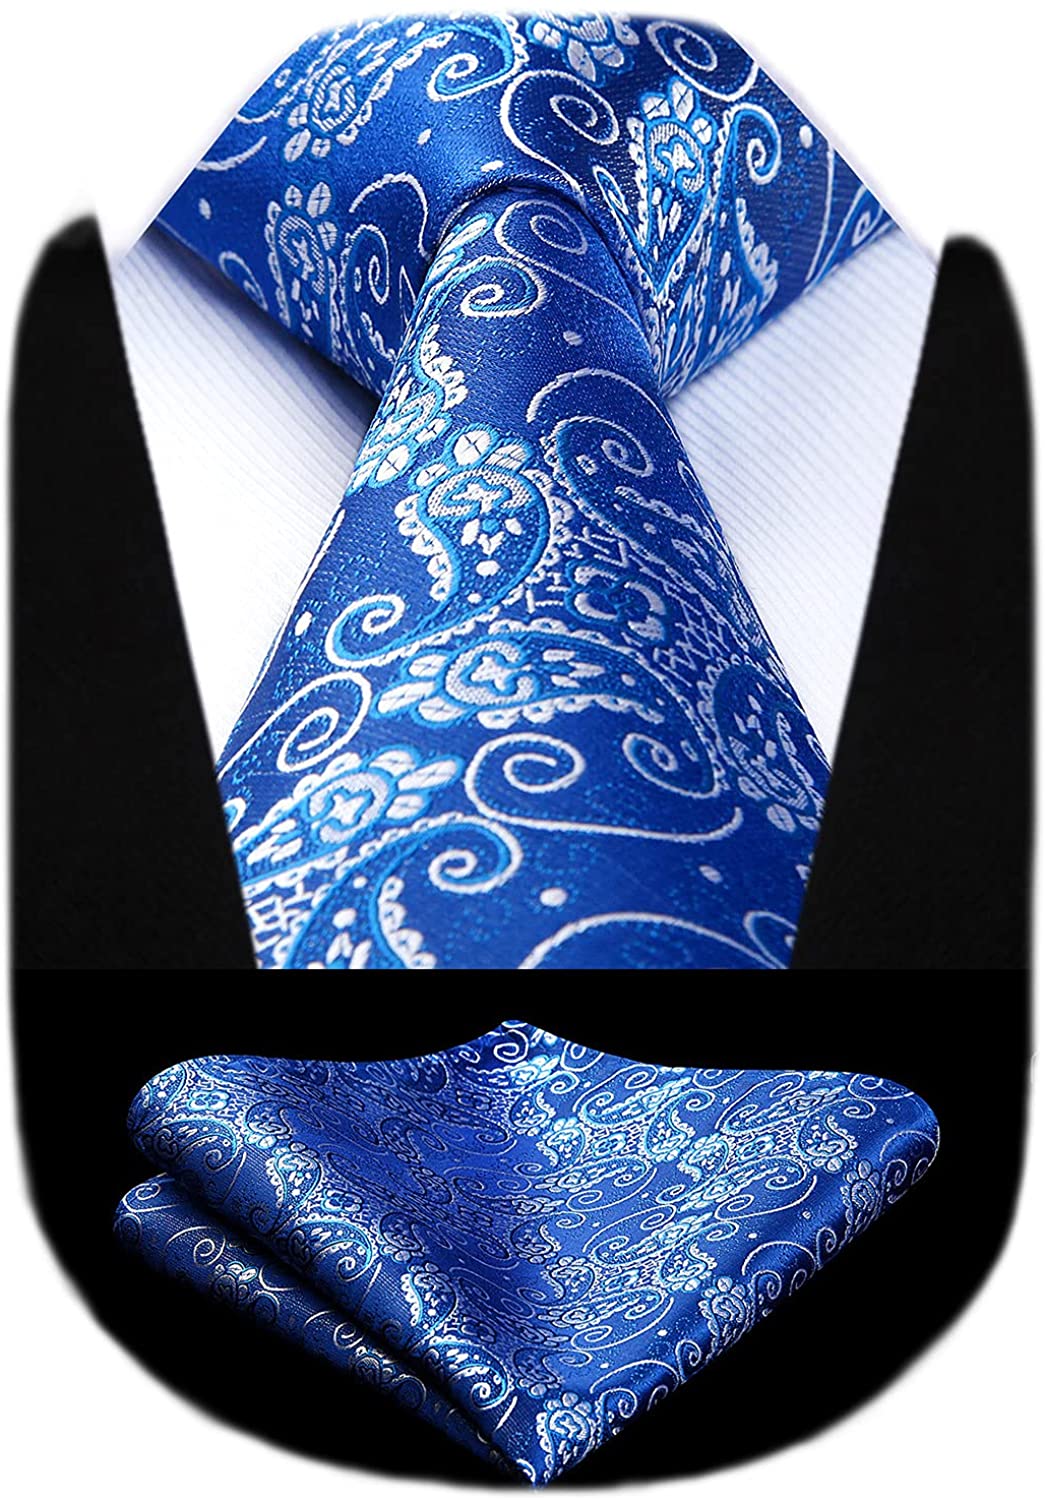 HISDERN Paisley Tie Handkerchief Woven Classic Men's Necktie & Pocket Square Set 